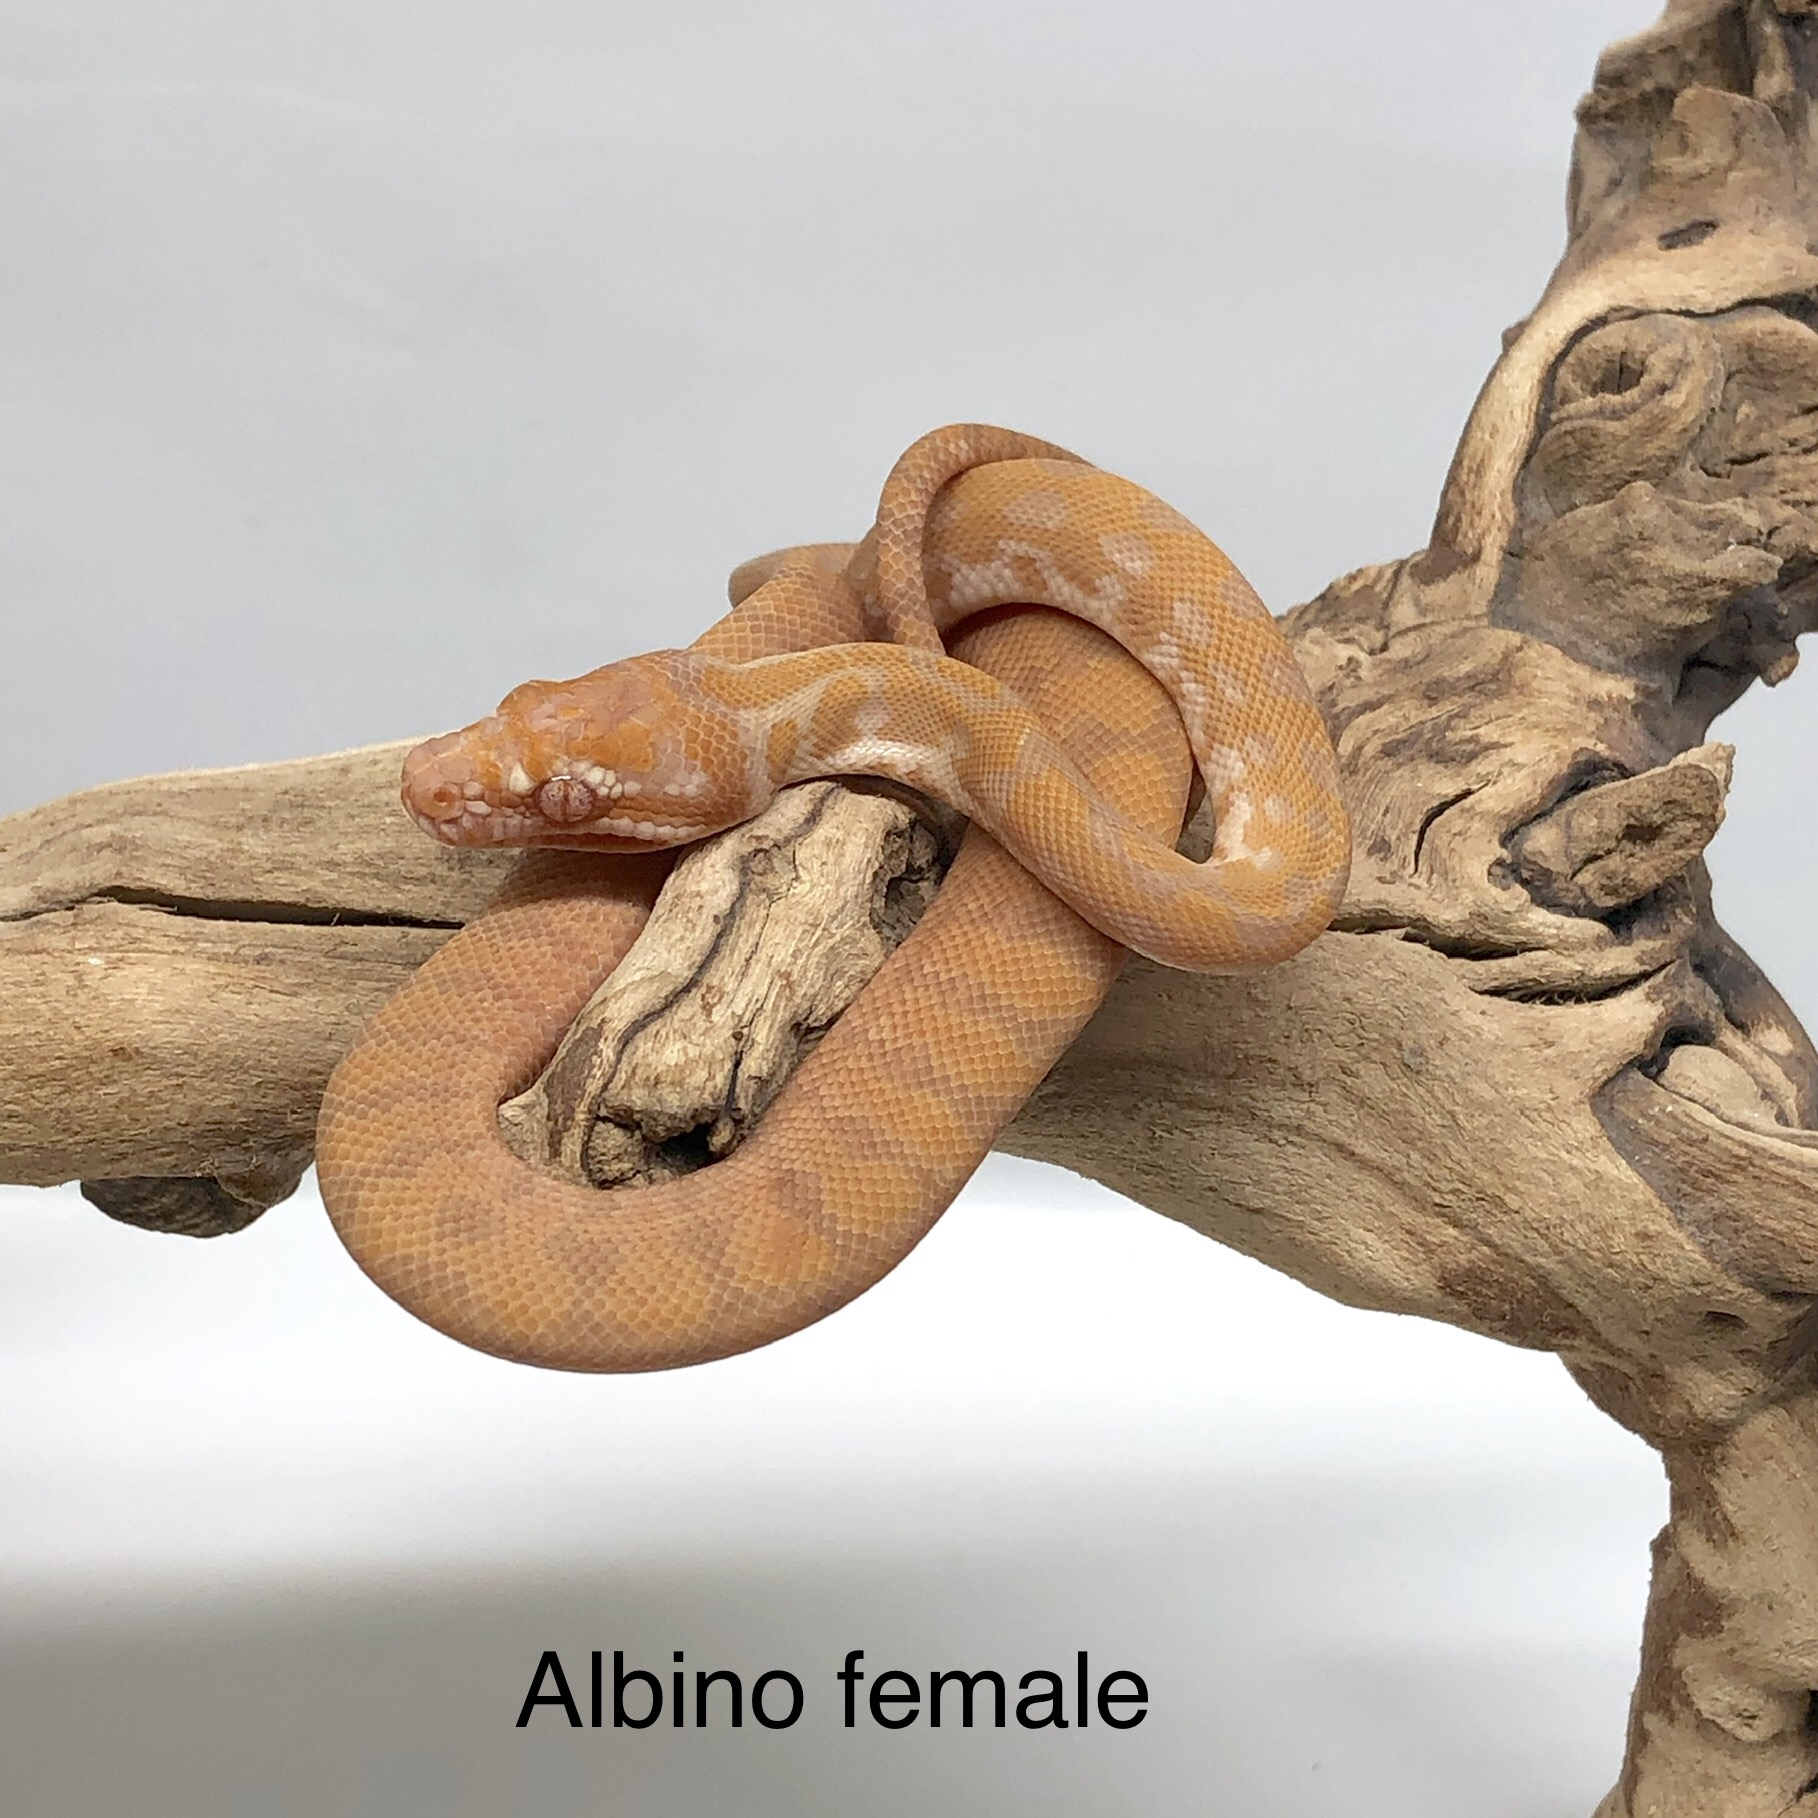 Albino Other Carpet Python by Fire Horse Exotics LLC